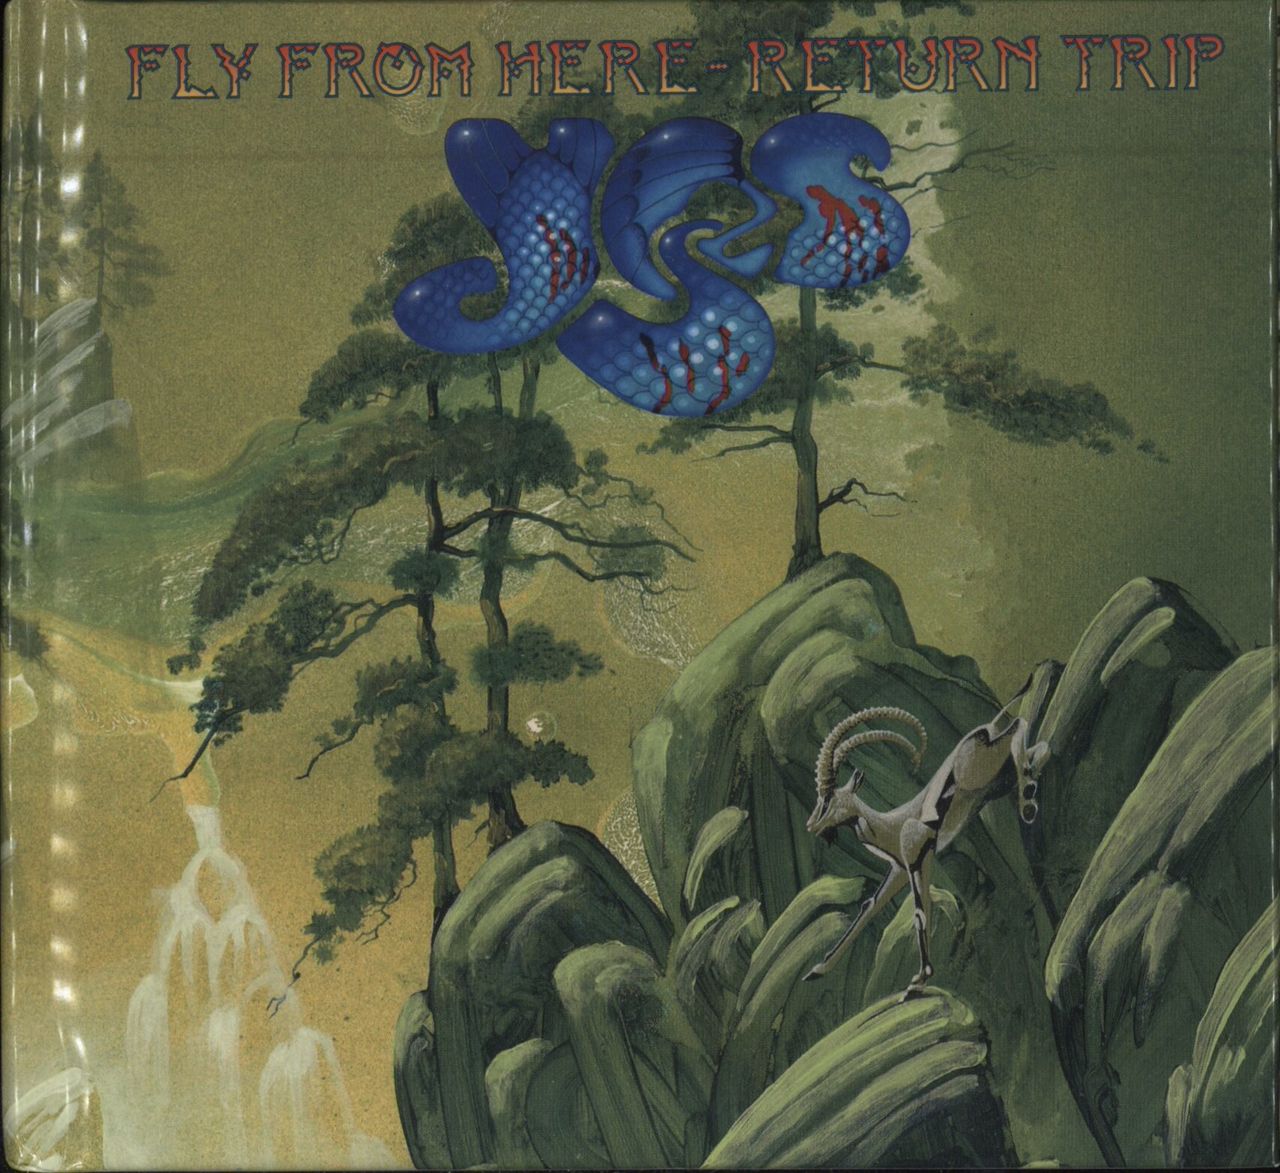 Yes Fly From Here - Return Trip UK CD album (CDLP) YES001CD